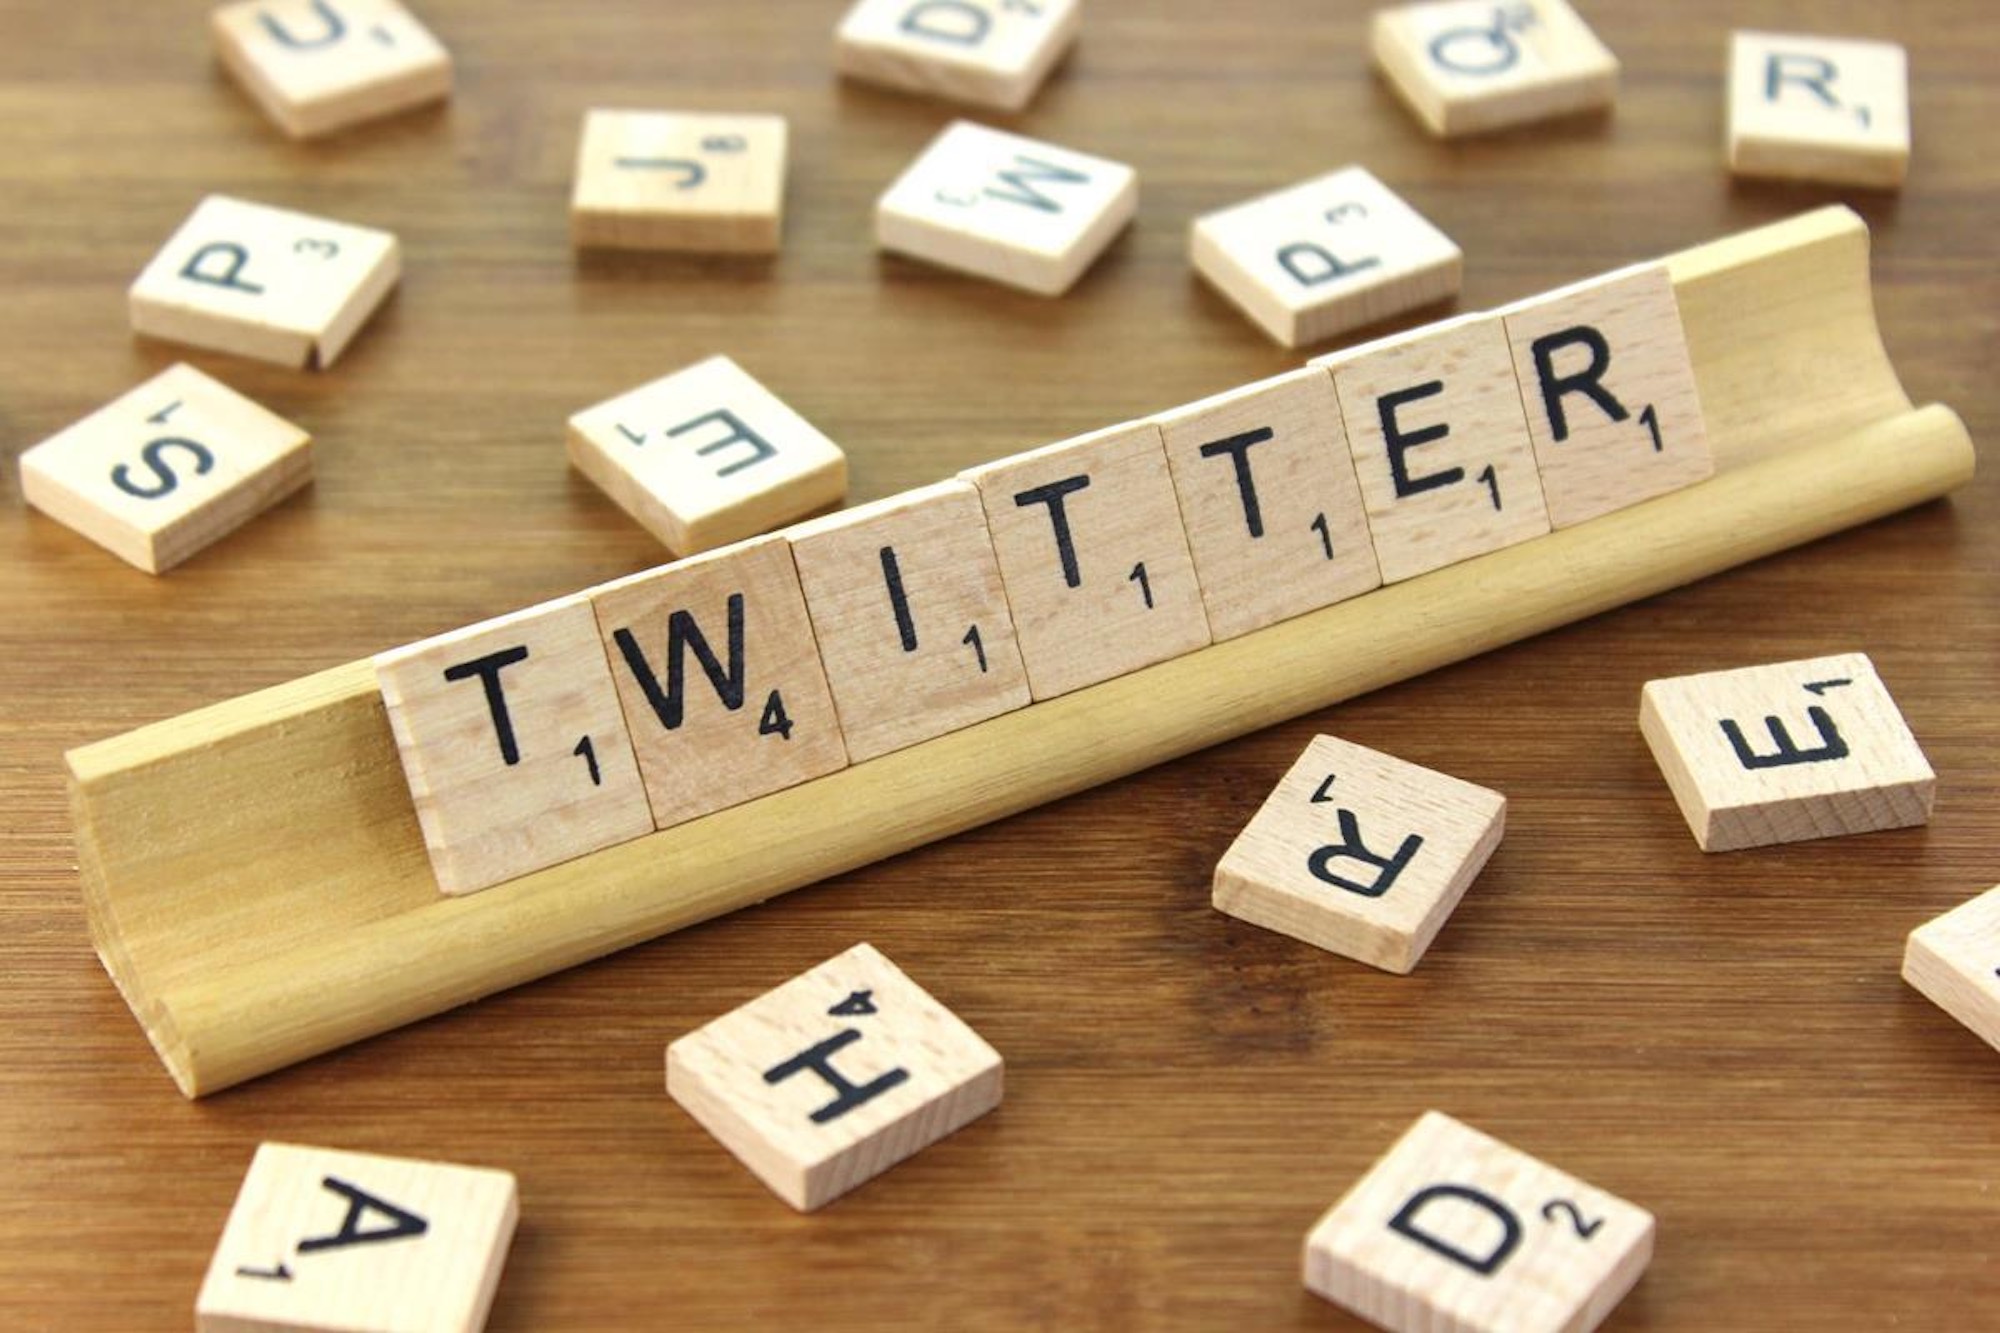 Seguidores de Twitter continuan en descenso